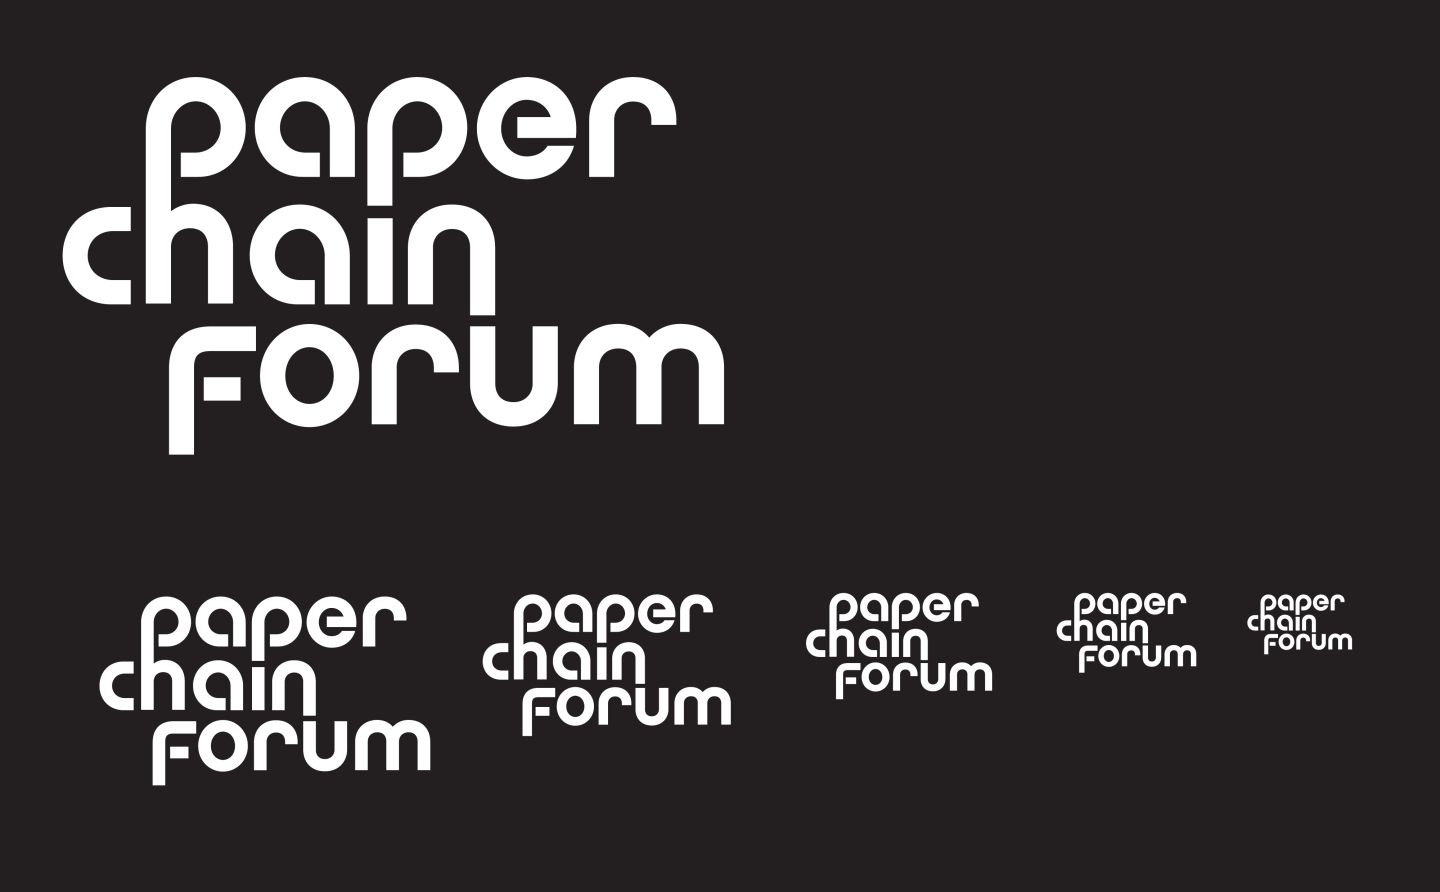 hugo-puttaert-visionandfactory-paper-chain-forum